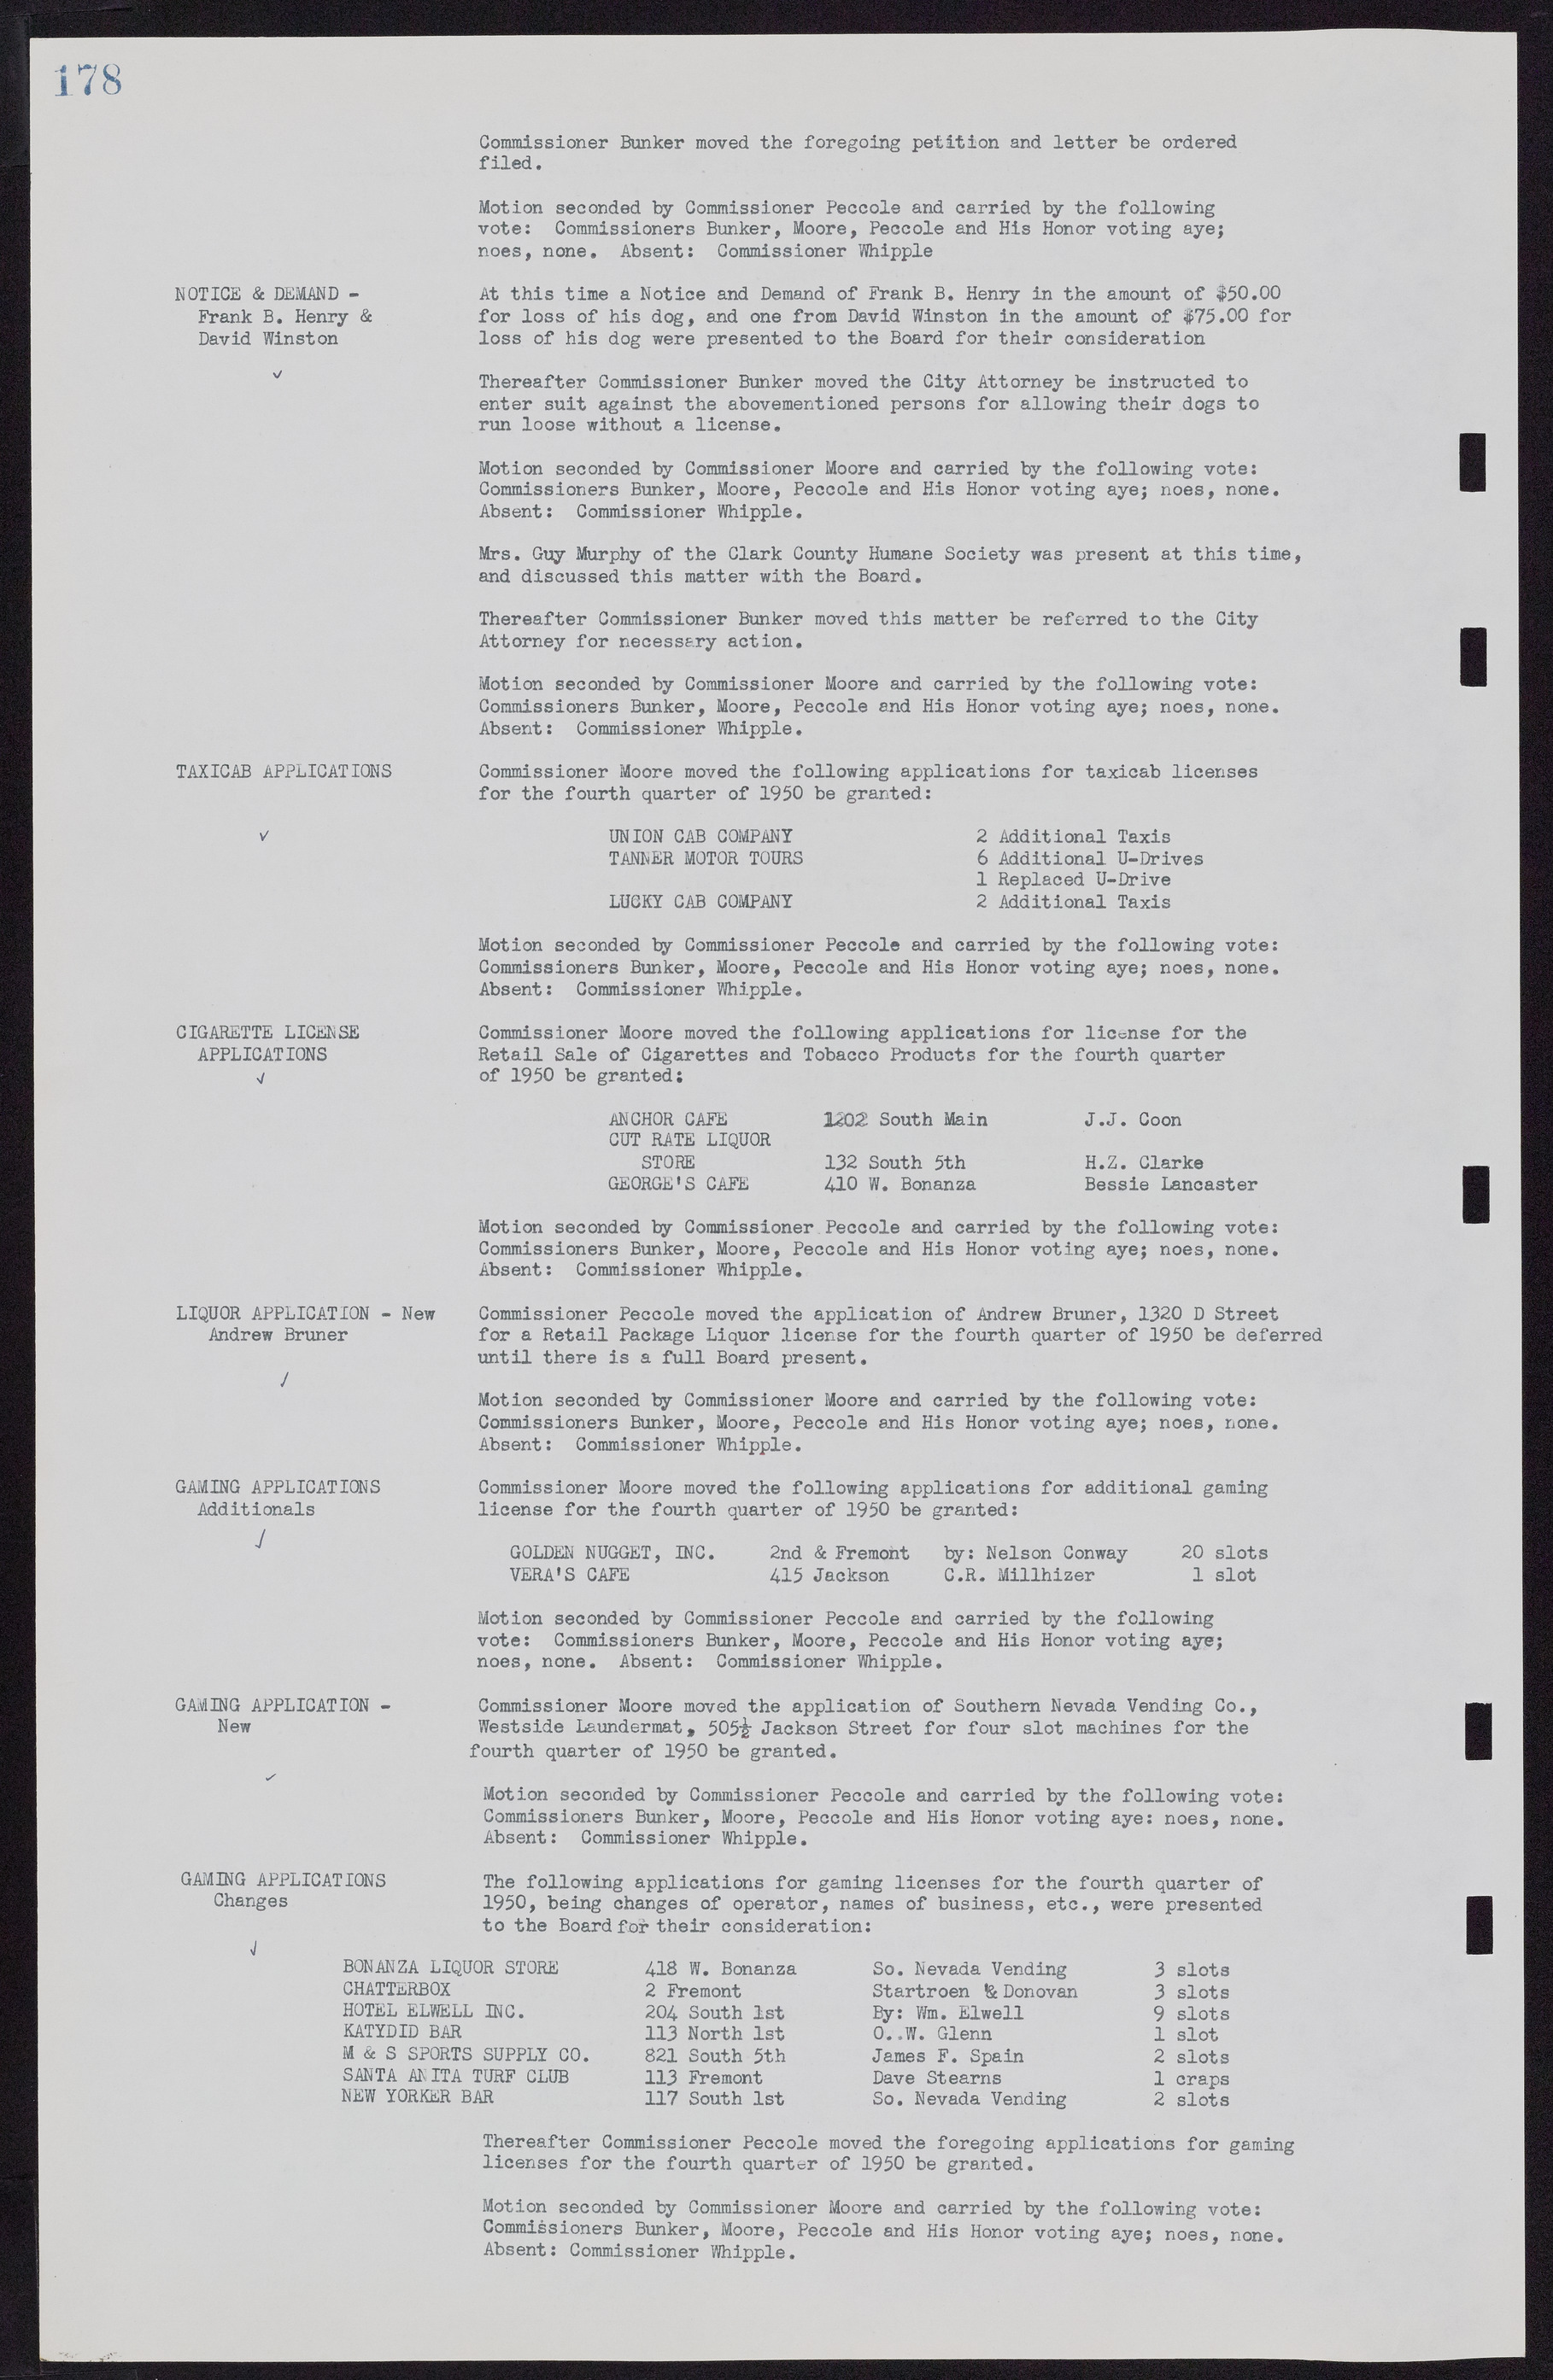 Las Vegas City Commission Minutes, November 7, 1949 to May 21, 1952, lvc000007-188